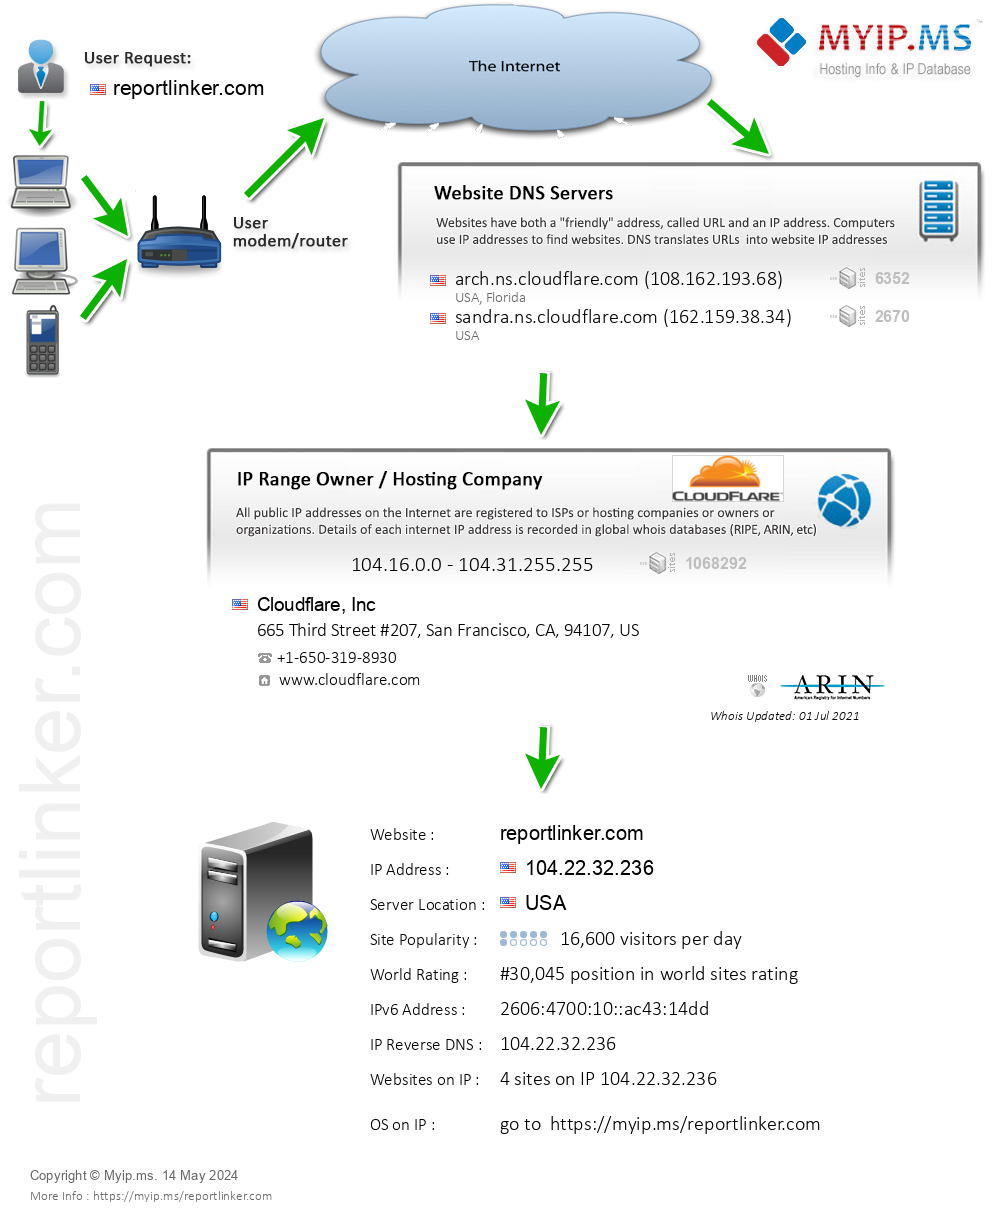 Reportlinker.com - Website Hosting Visual IP Diagram